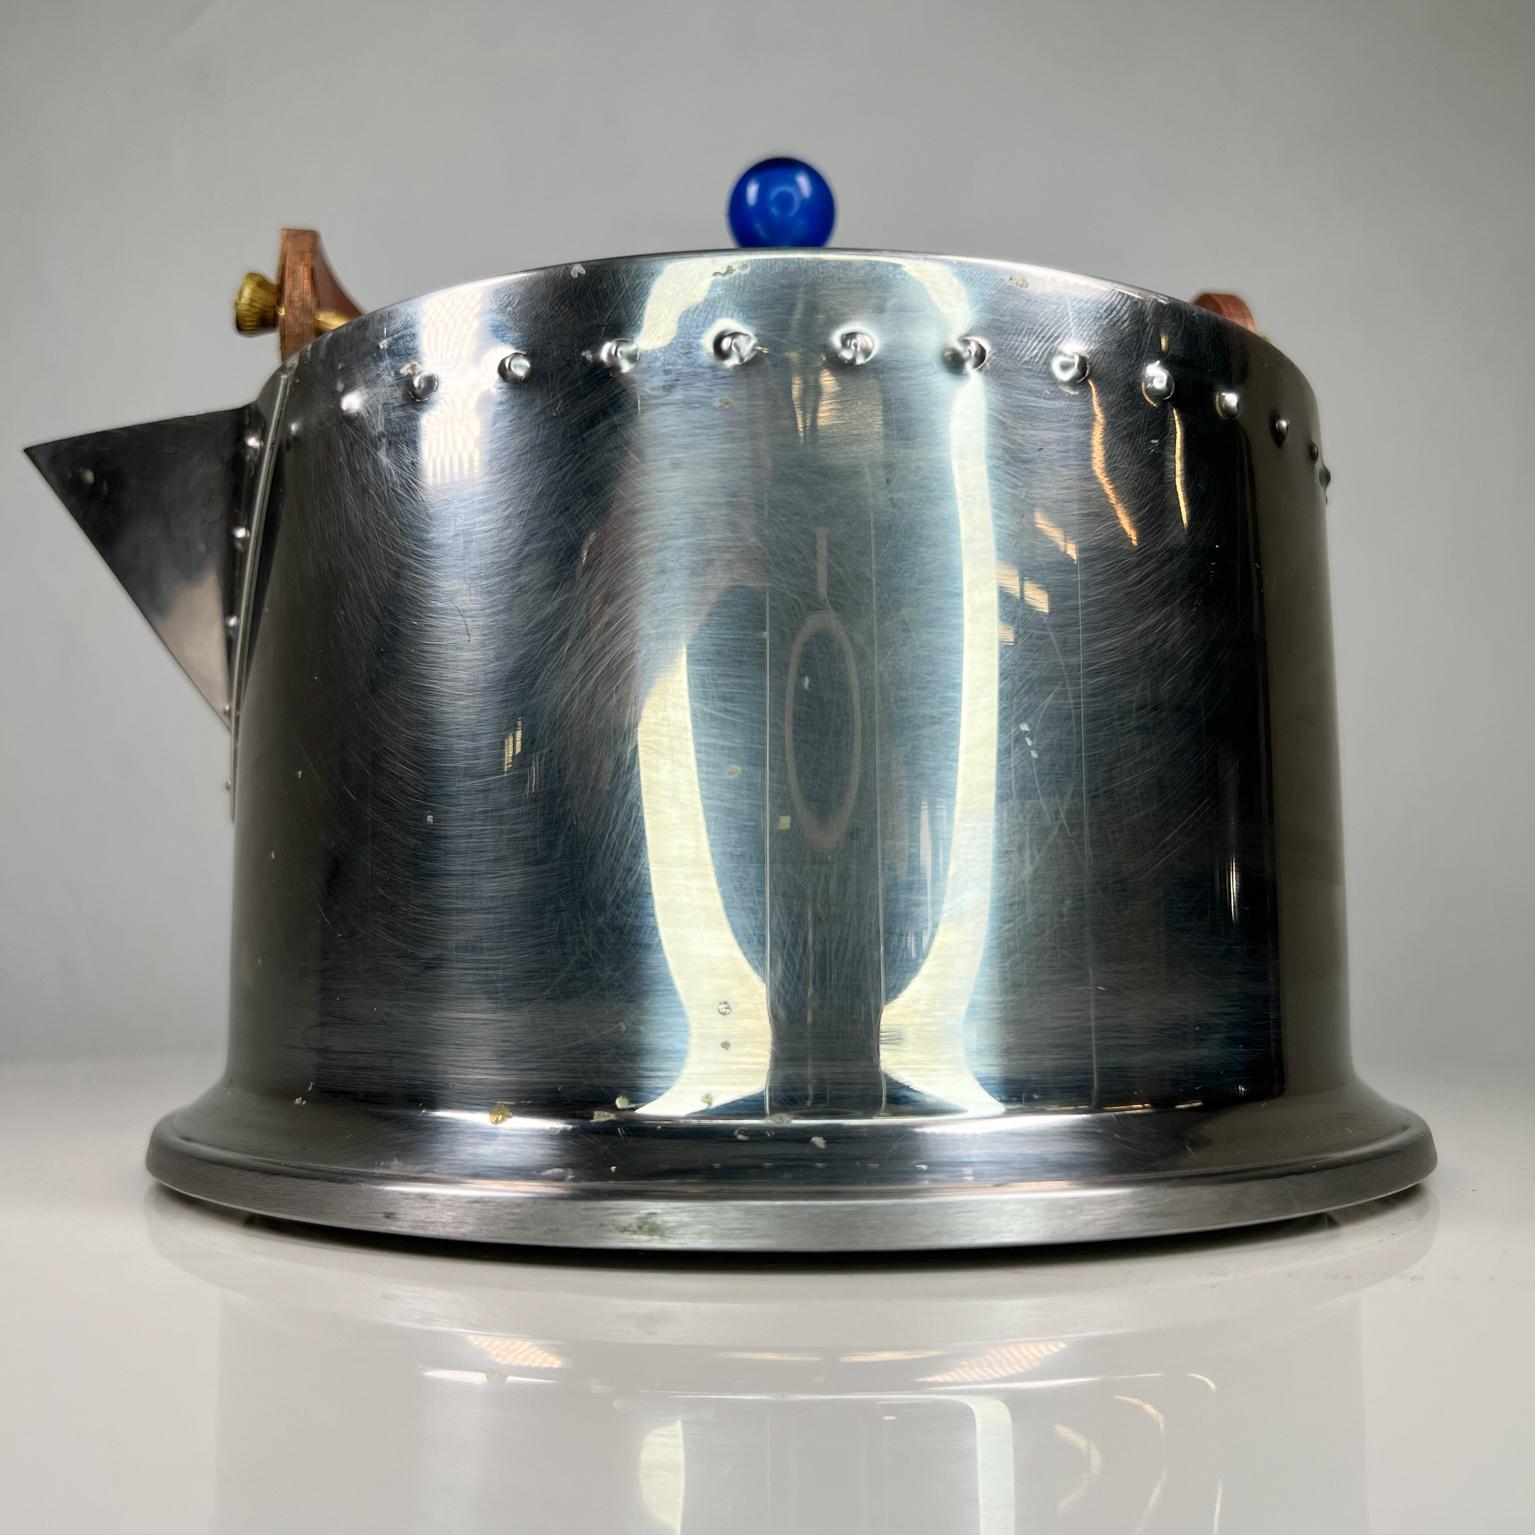 Italian Italy Postmodern Blue Finial Tea Pot Kettle Stainless Steel C Jorgensen Bodum